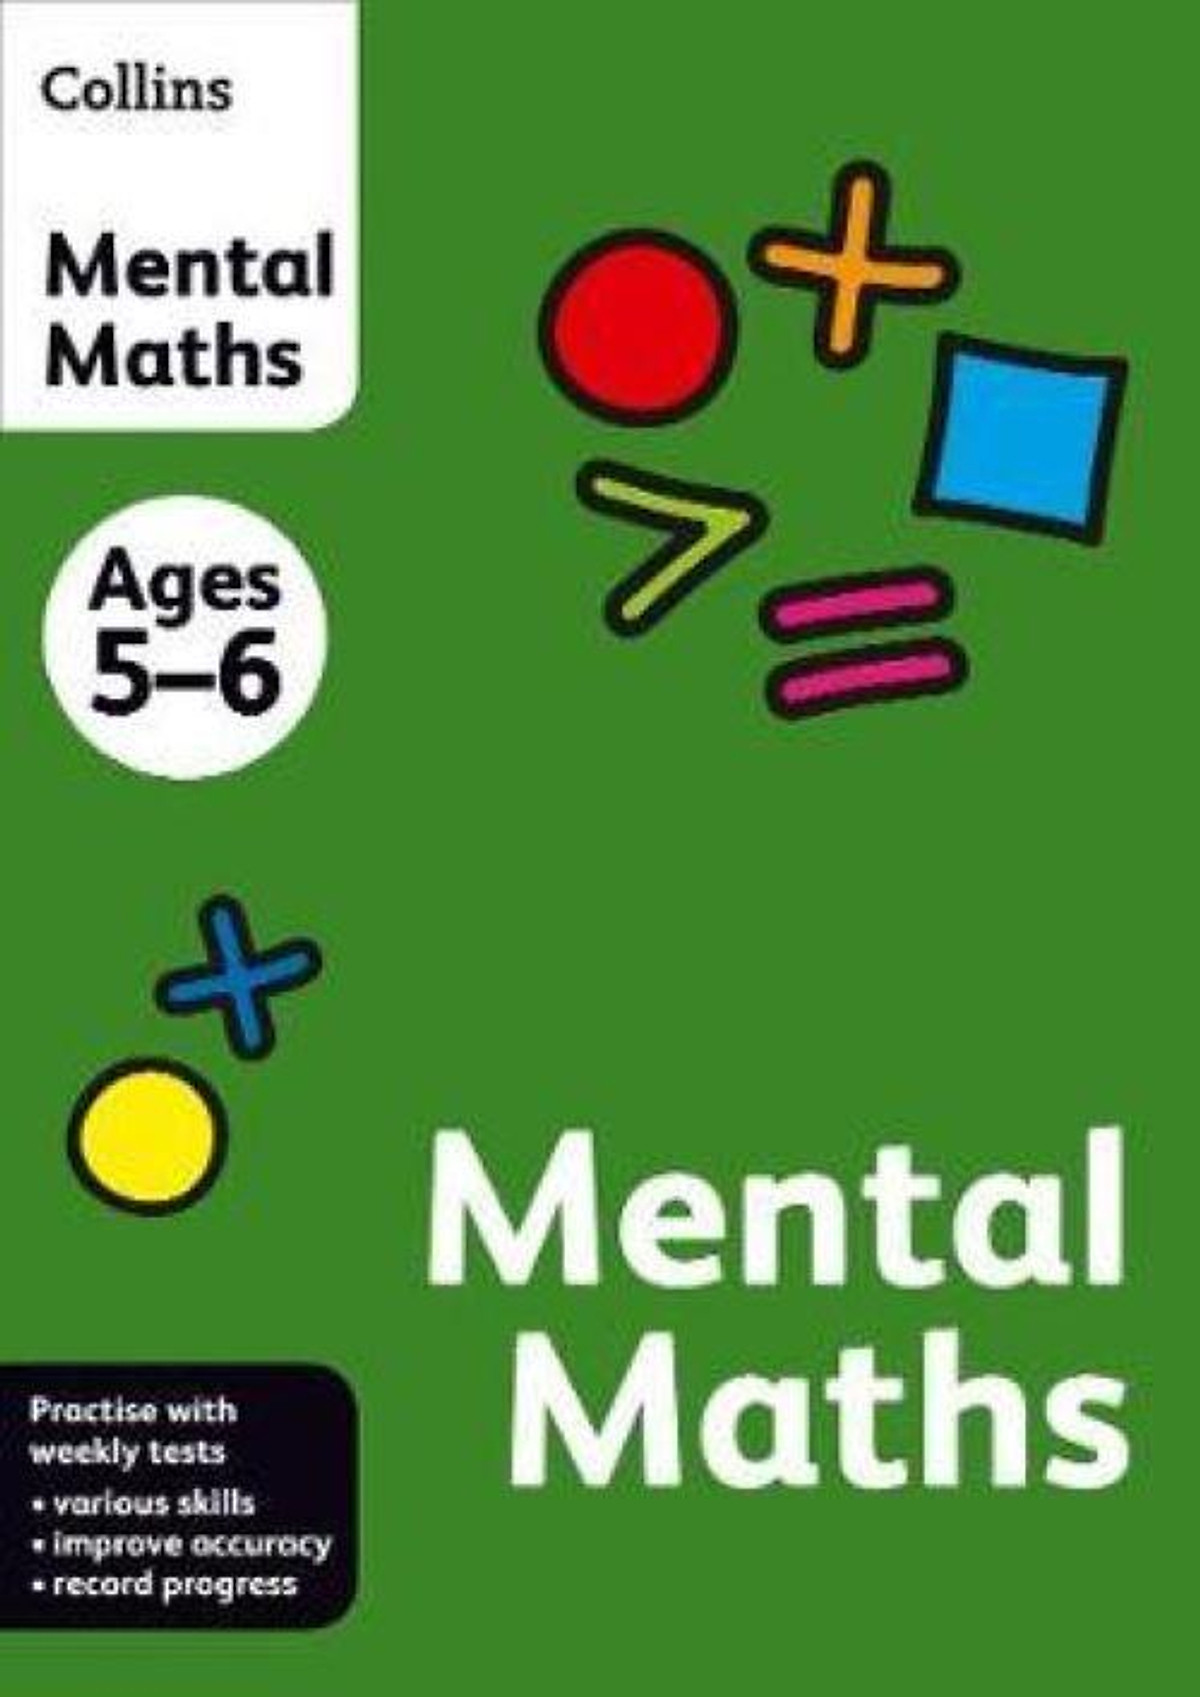 Collins Mental Maths 5-6